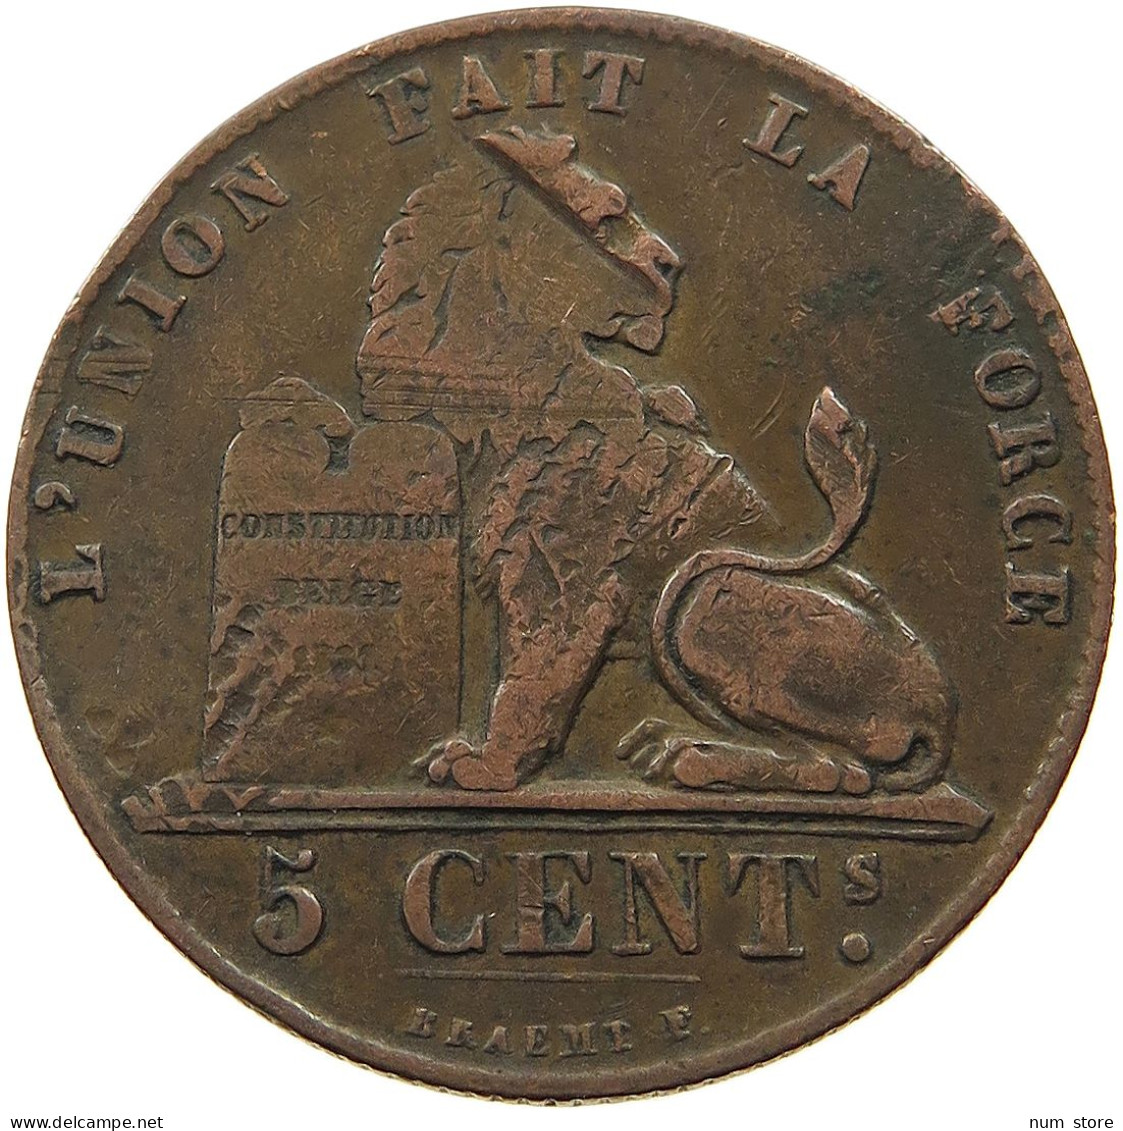 BELGIUM 5 CENTIMES 1847 5 CENTIMES 1847 MINTING ERROR OVERSTRUCK #t061 0187 - 5 Cents